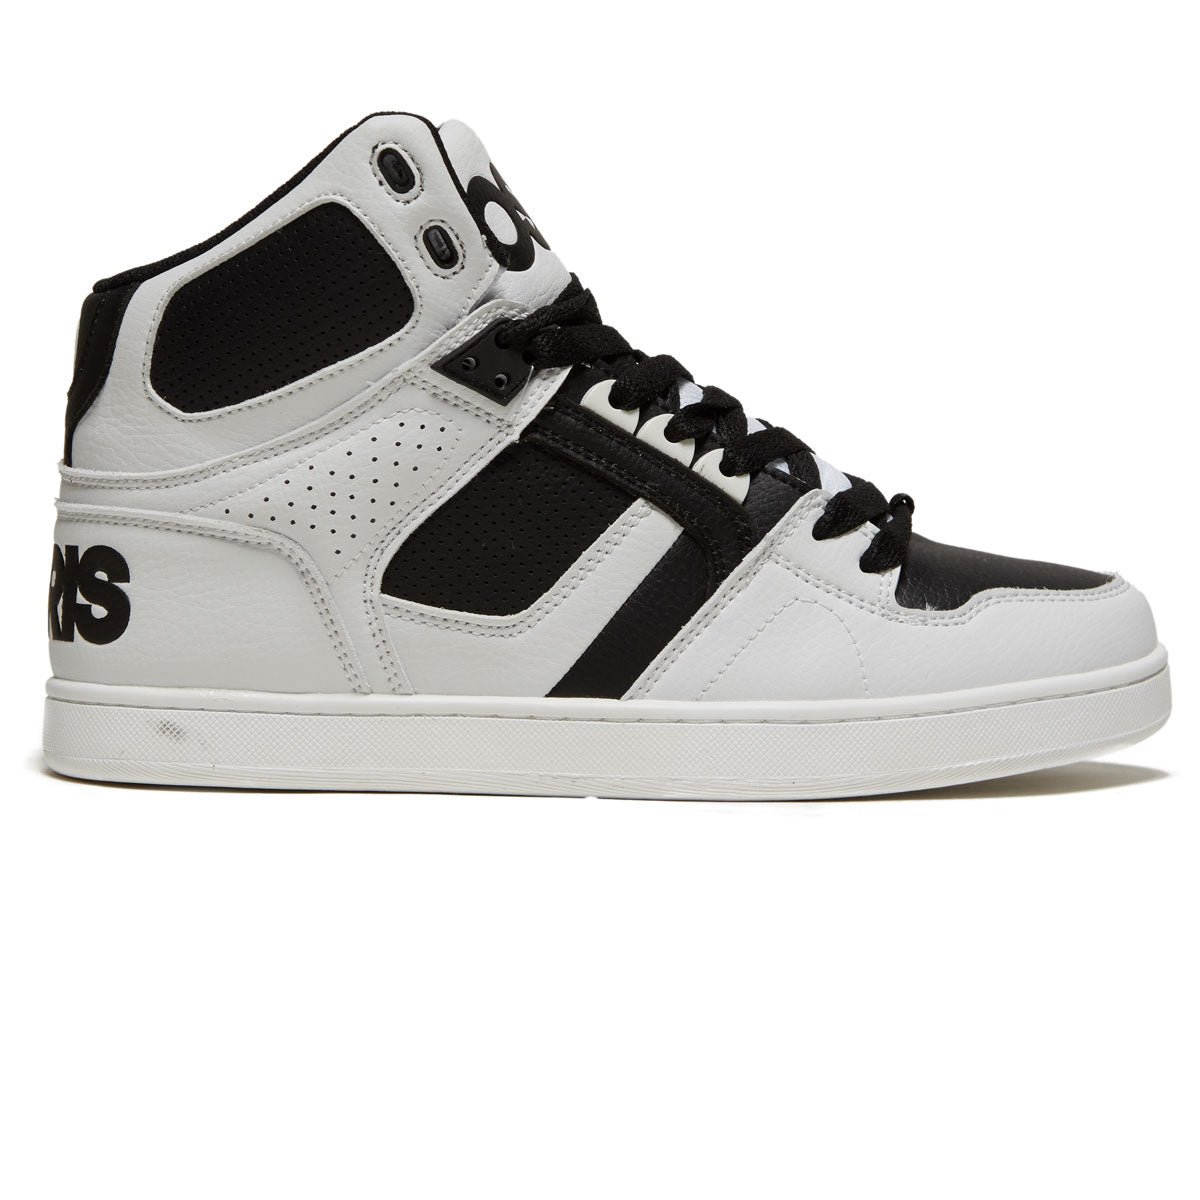 Osiris Nyc 83 Clk Shoes - White/Black image 1